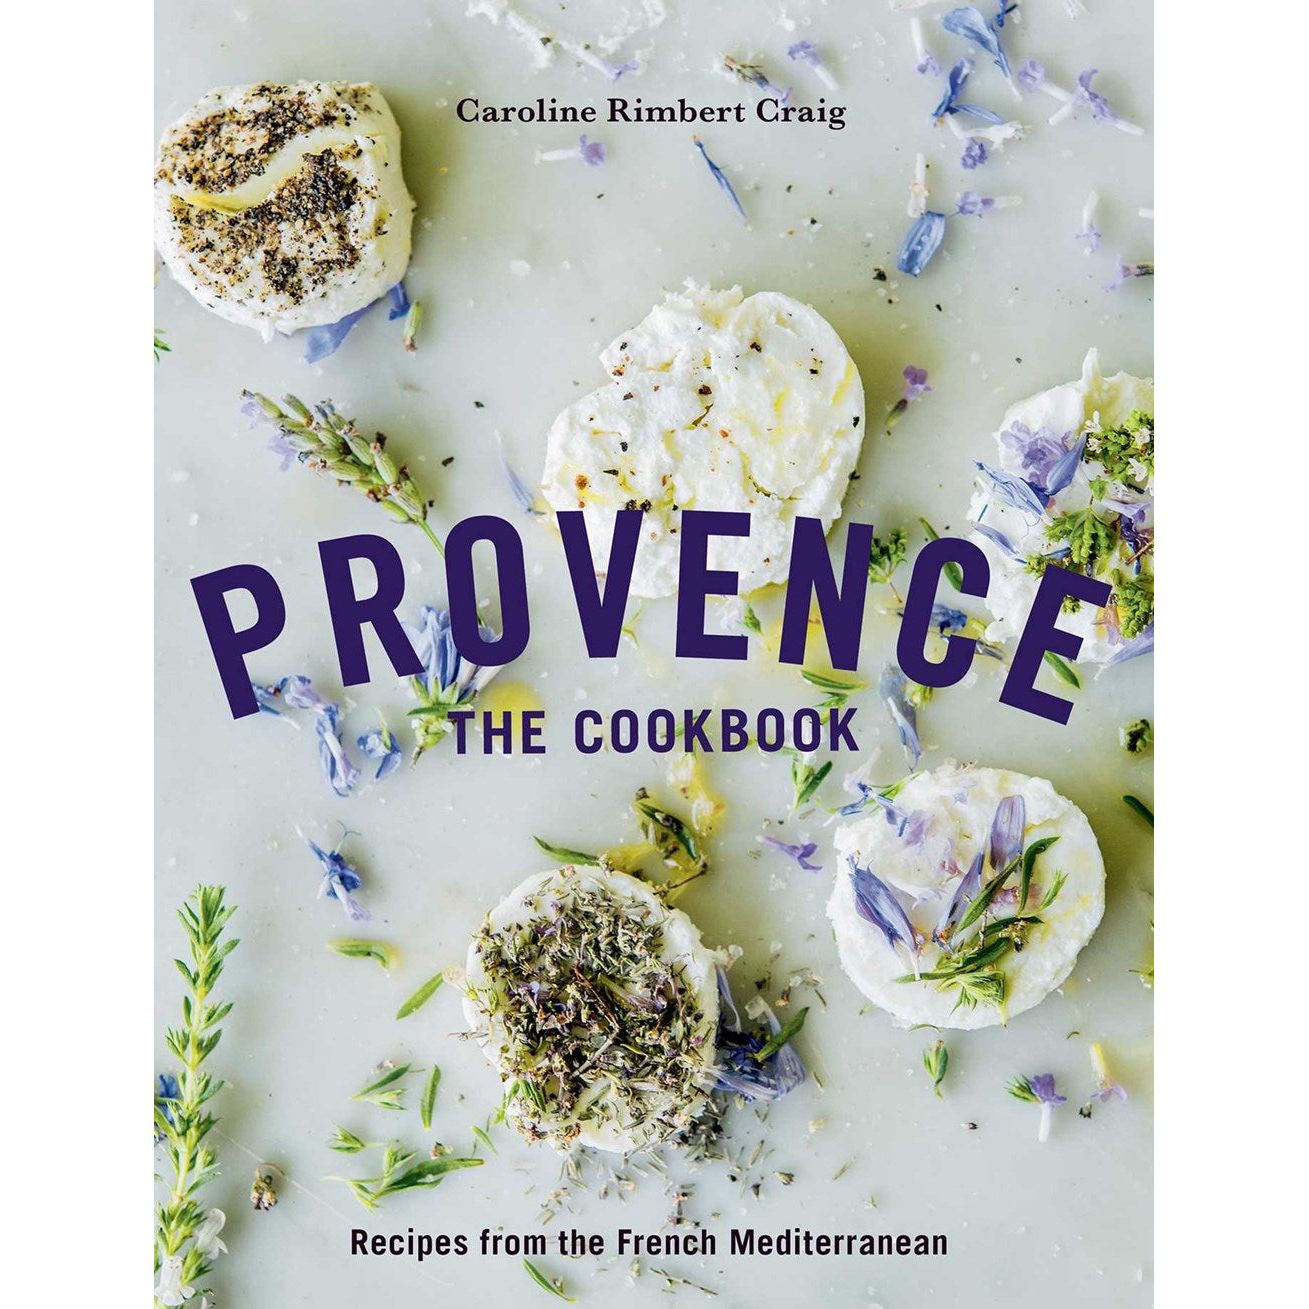 Provence : The Cookbook (Caroline Rimbert Craig)